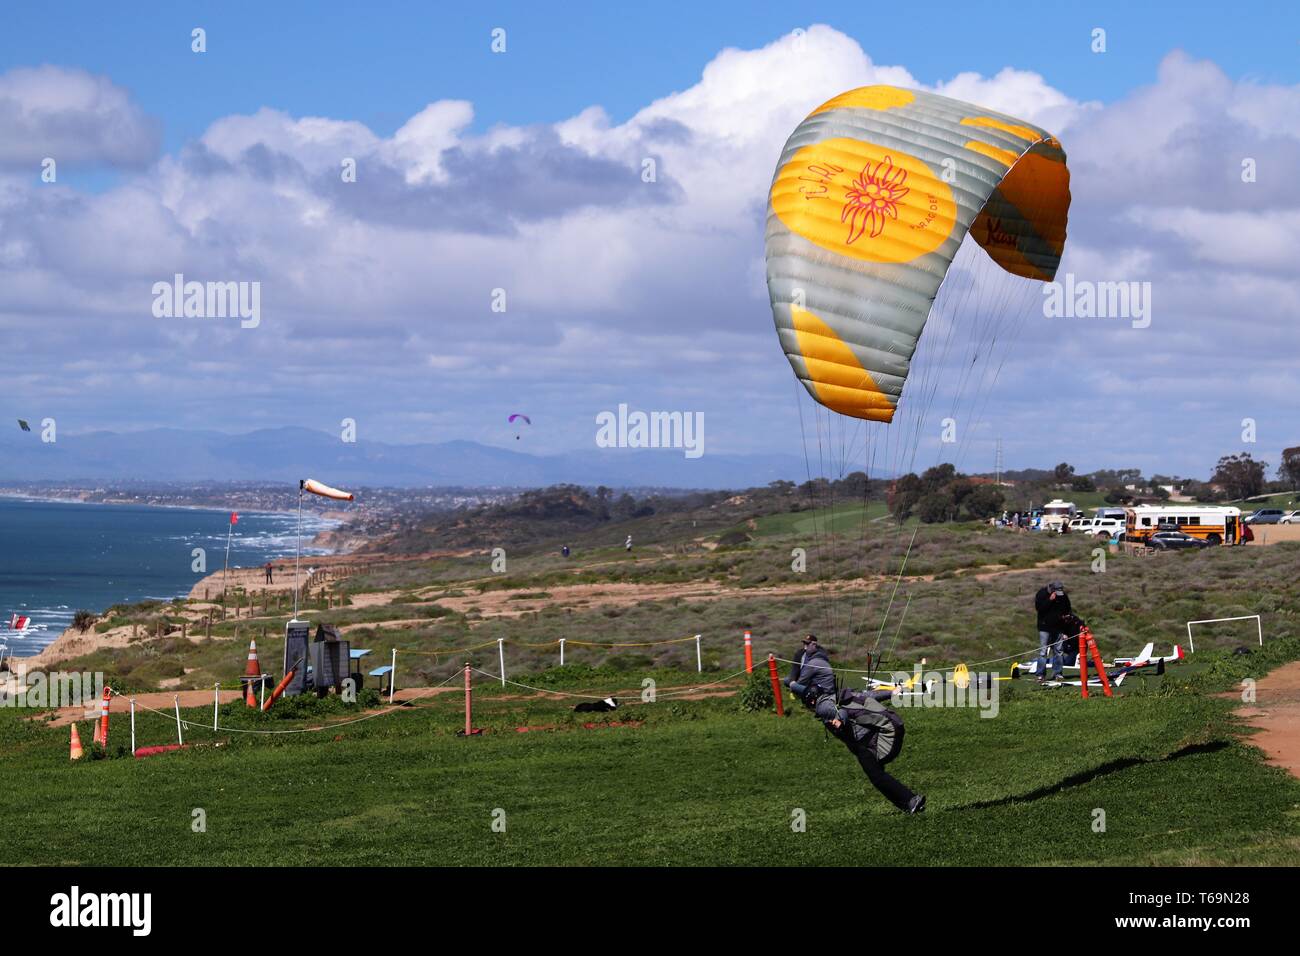 Hang gliding at Torrey Pines San Diego Stock Photo